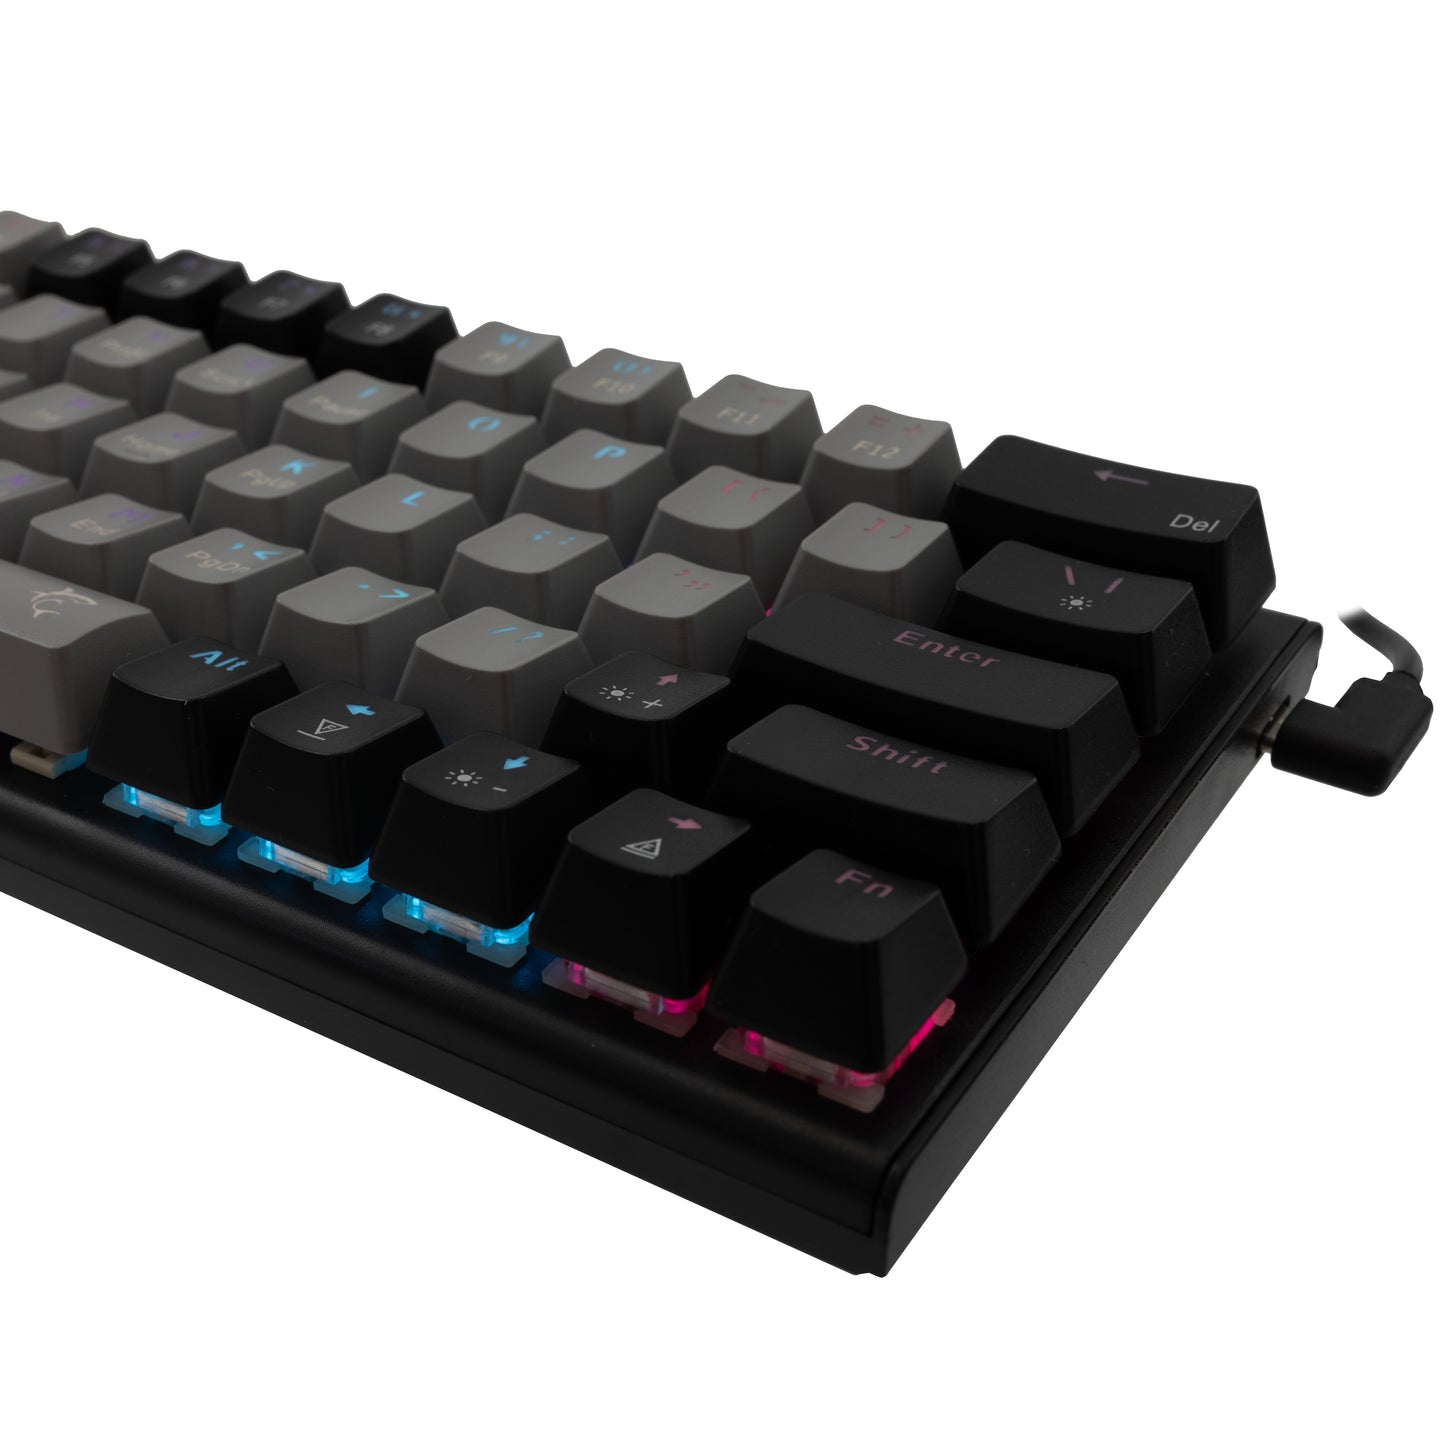 White Shark GK-002711 Wakizashi keyboard gray-black with Red Switches